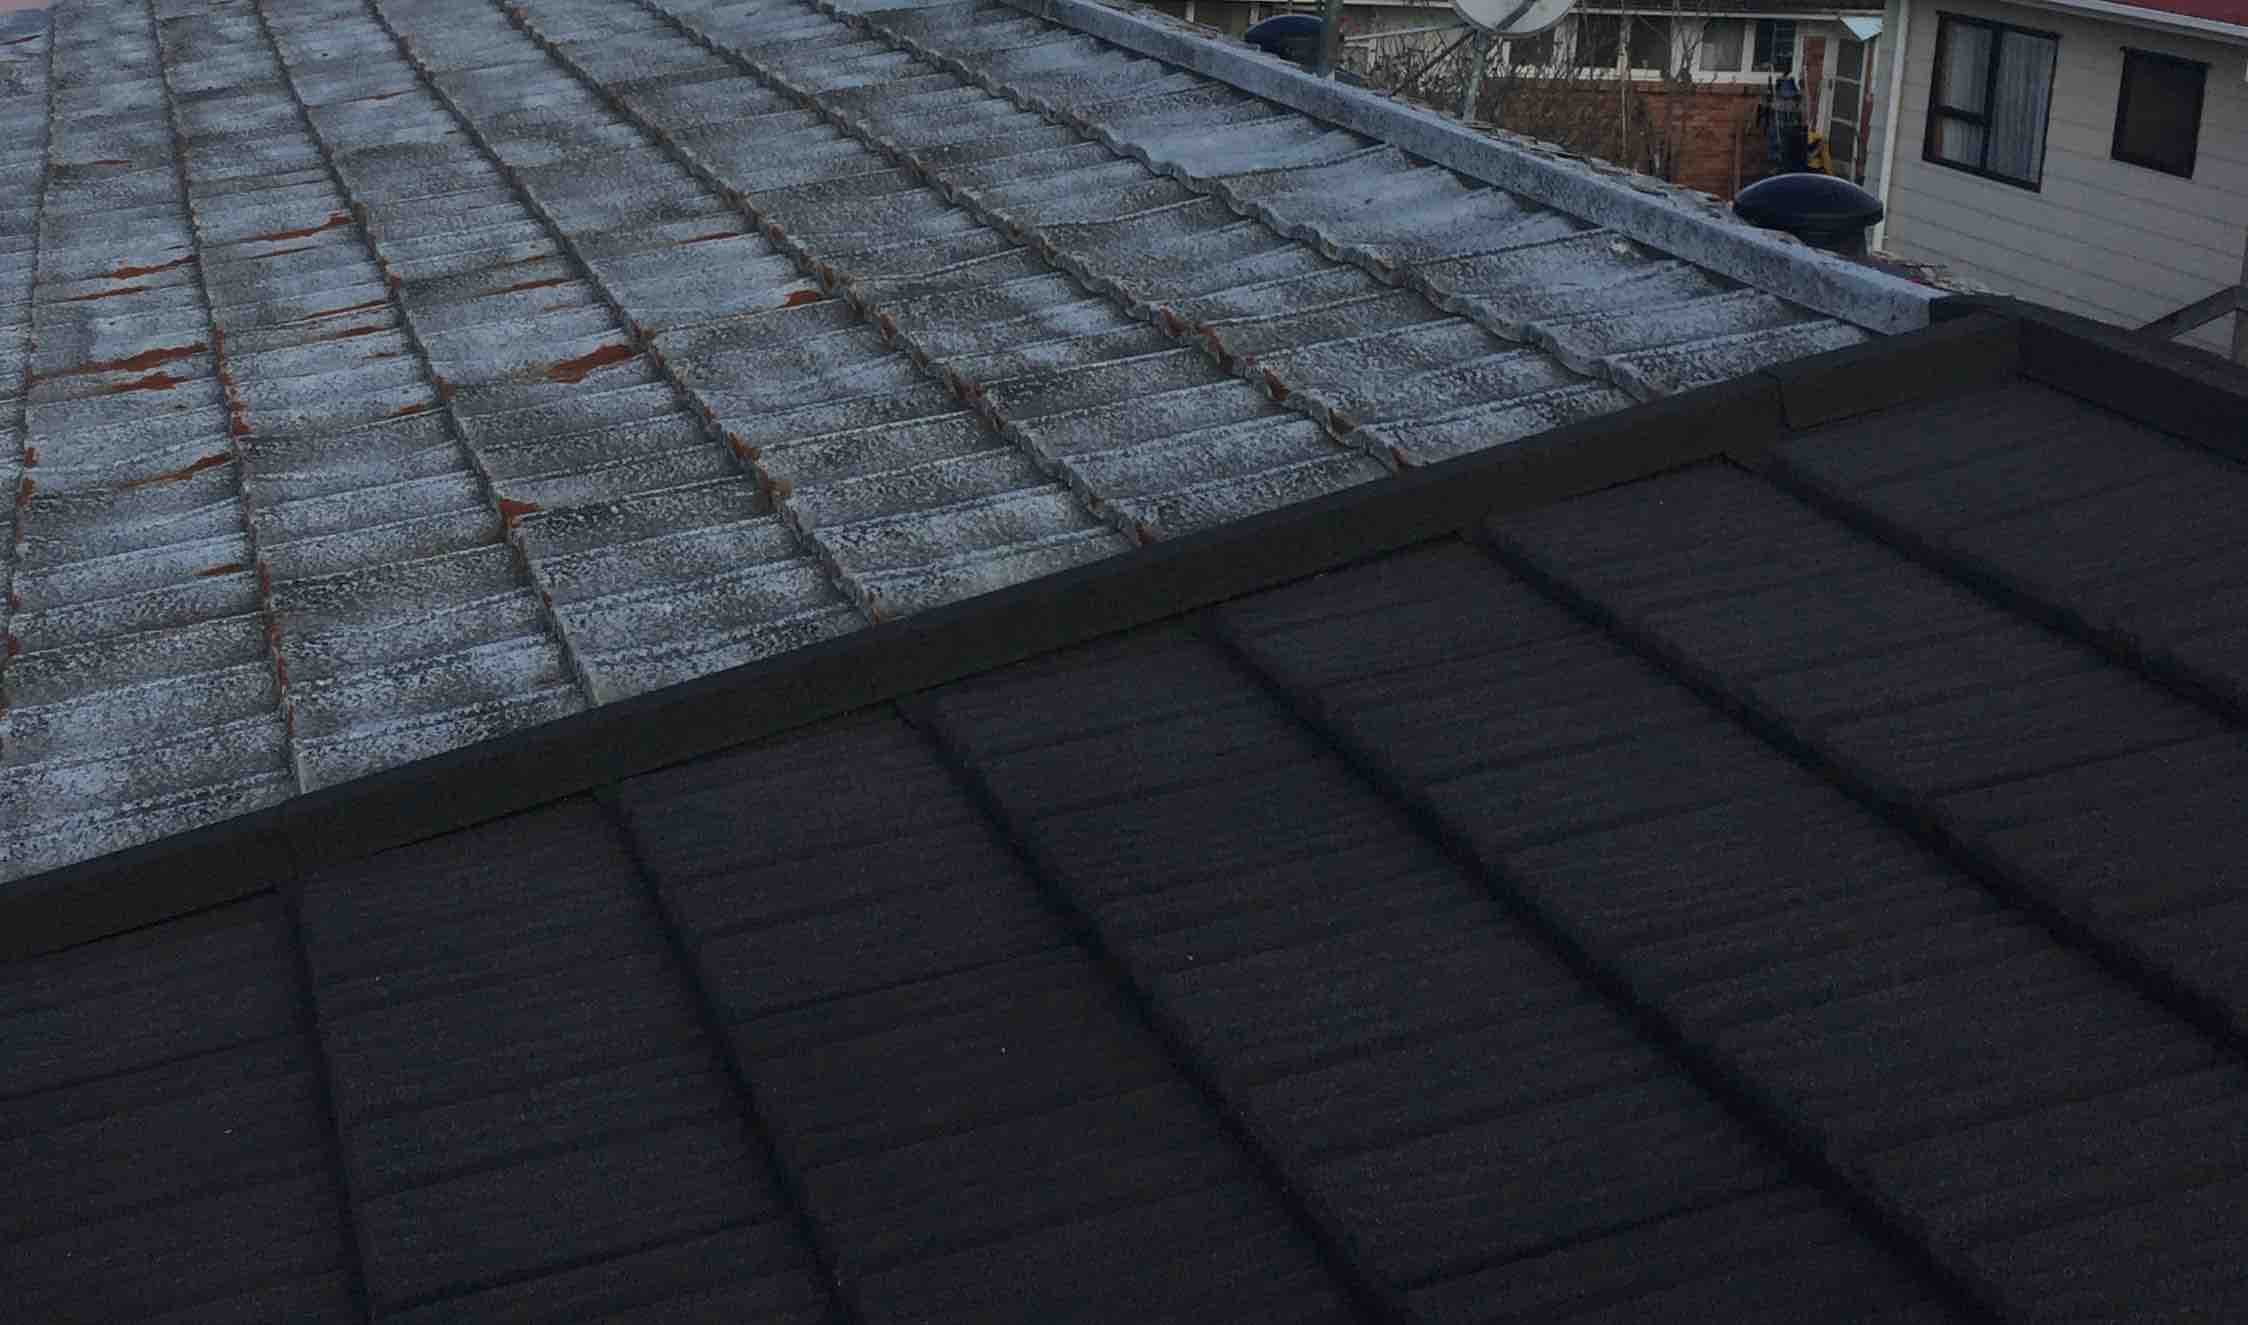 Metal Tile Old & New Roof Comparison